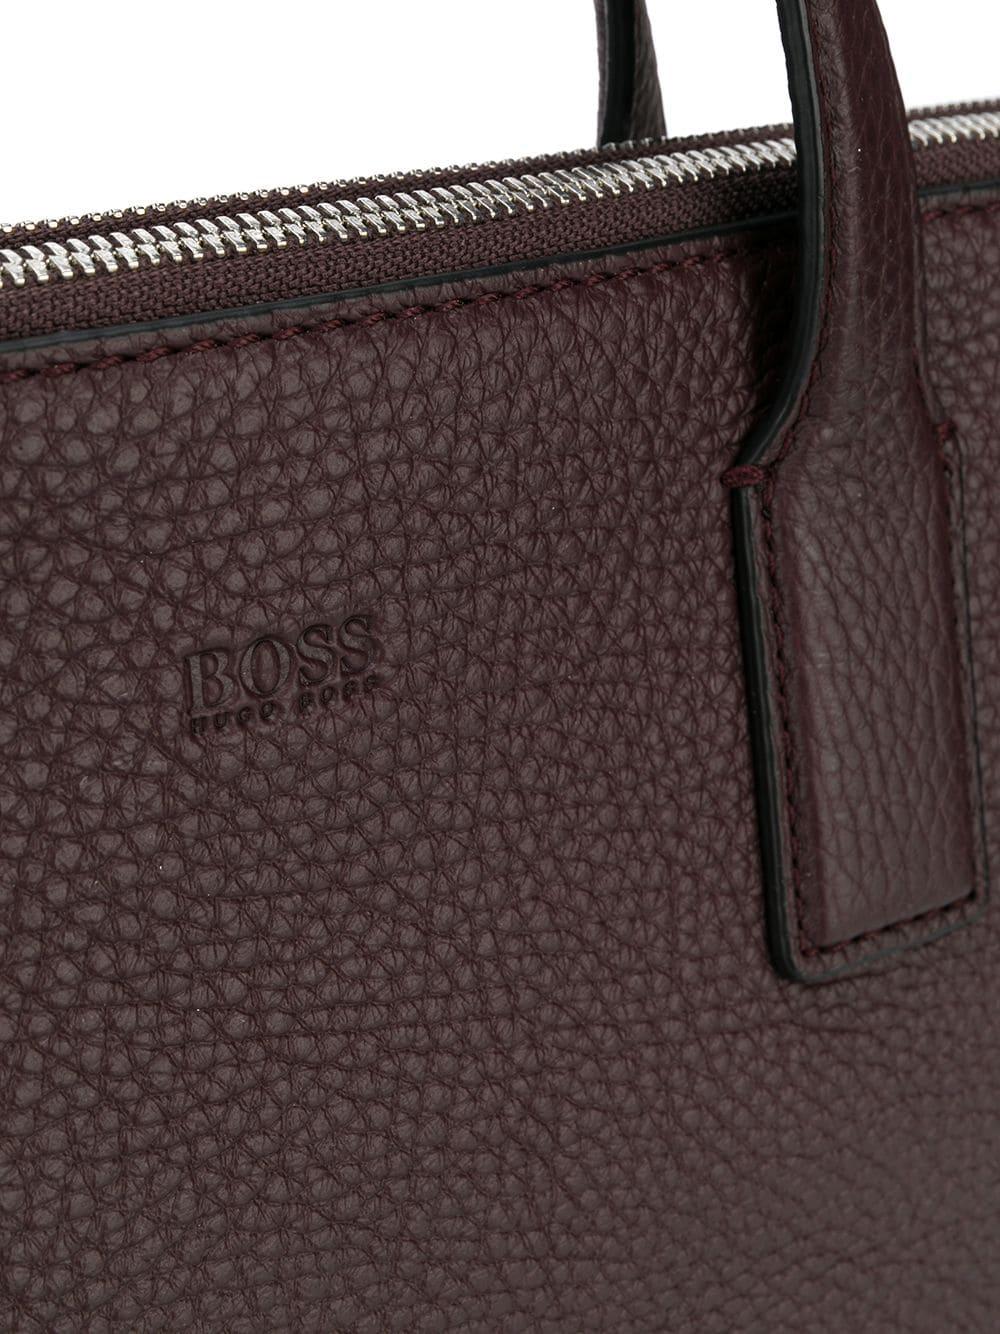 BOSS by HUGO BOSS Leather Zipped Laptop Bag in Brown for Men | Lyst  Australia